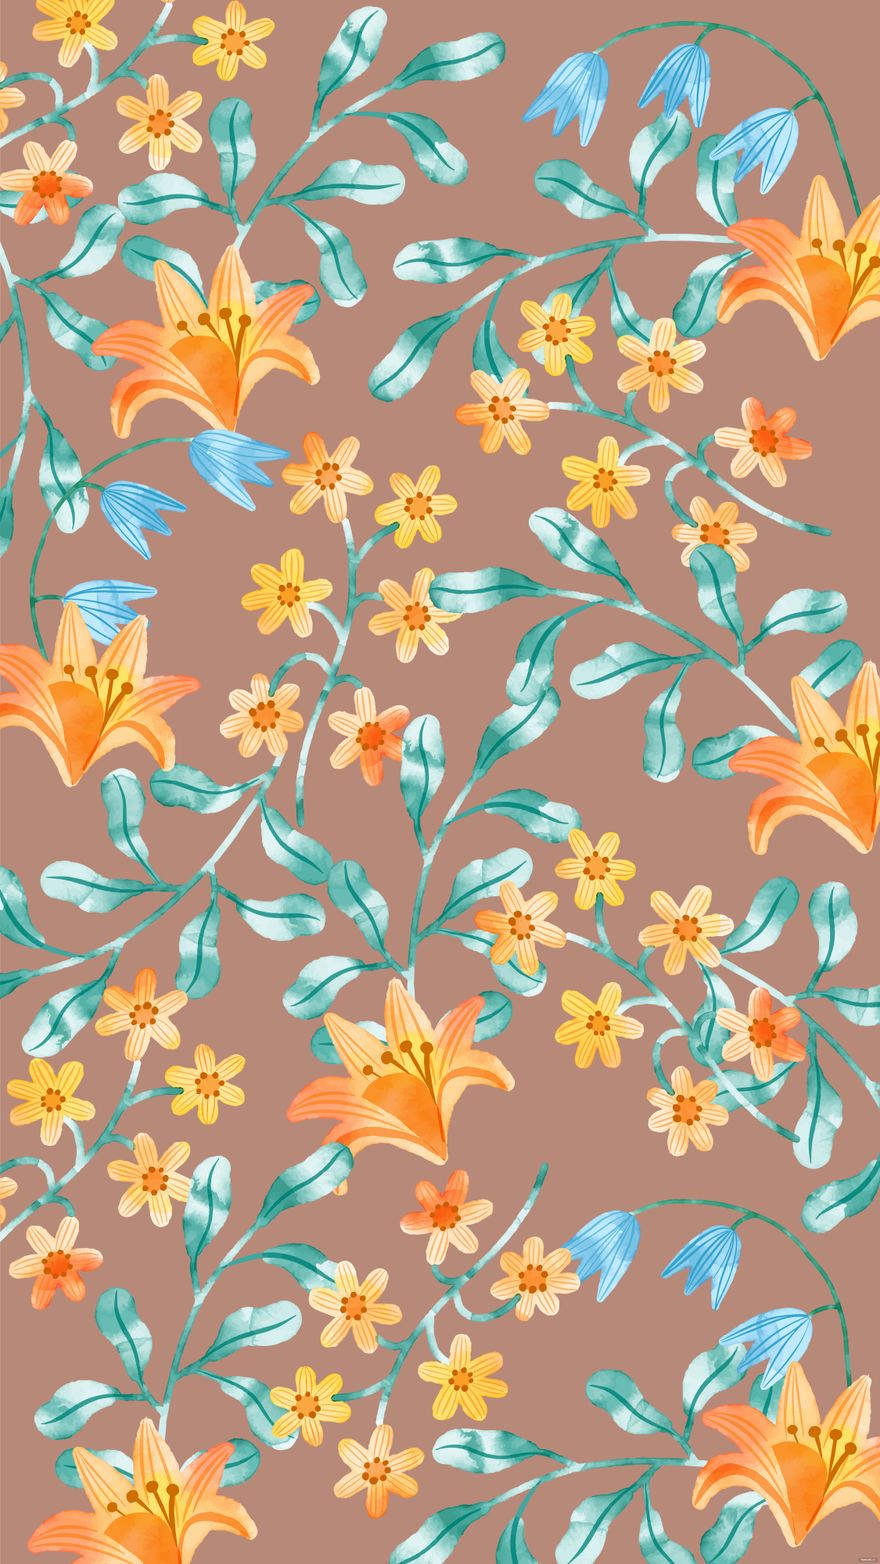 Free Aesthetic Retro Floral Background in Illustrator, EPS, SVG, JPG